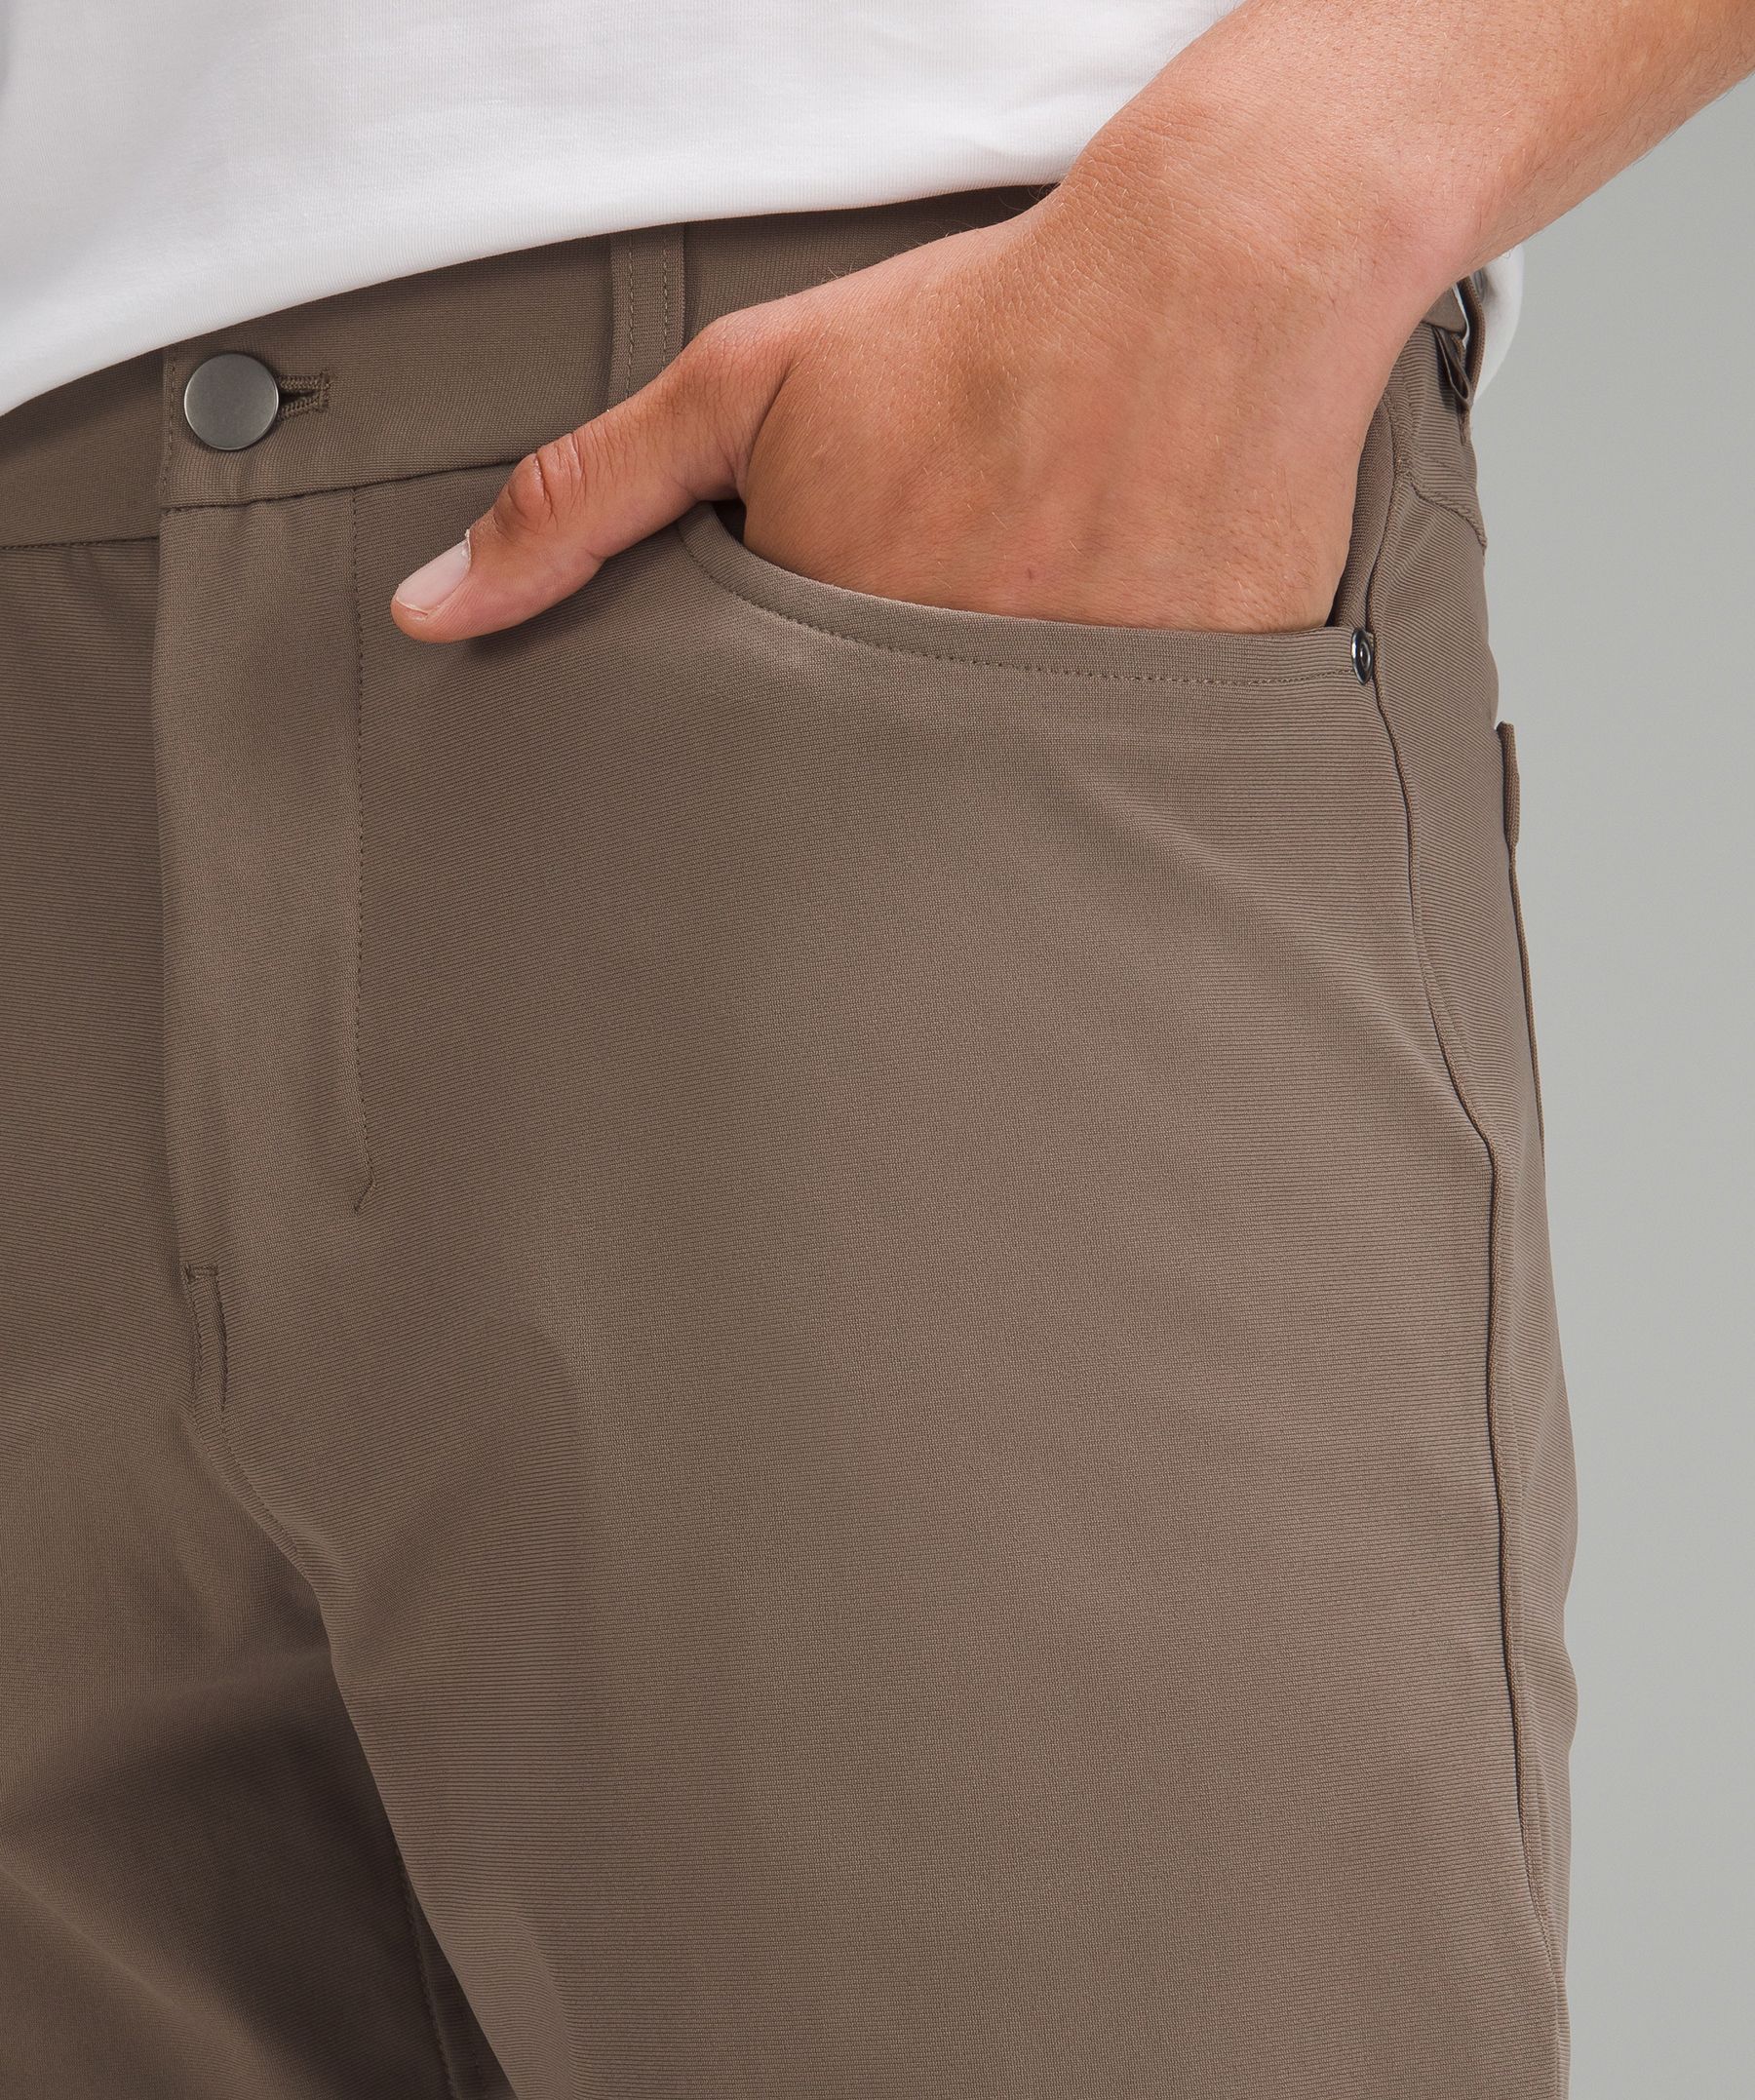 Lululemon ABC Slim-Fit 5 Pocket Pant 32"L *Warpstreme. 4